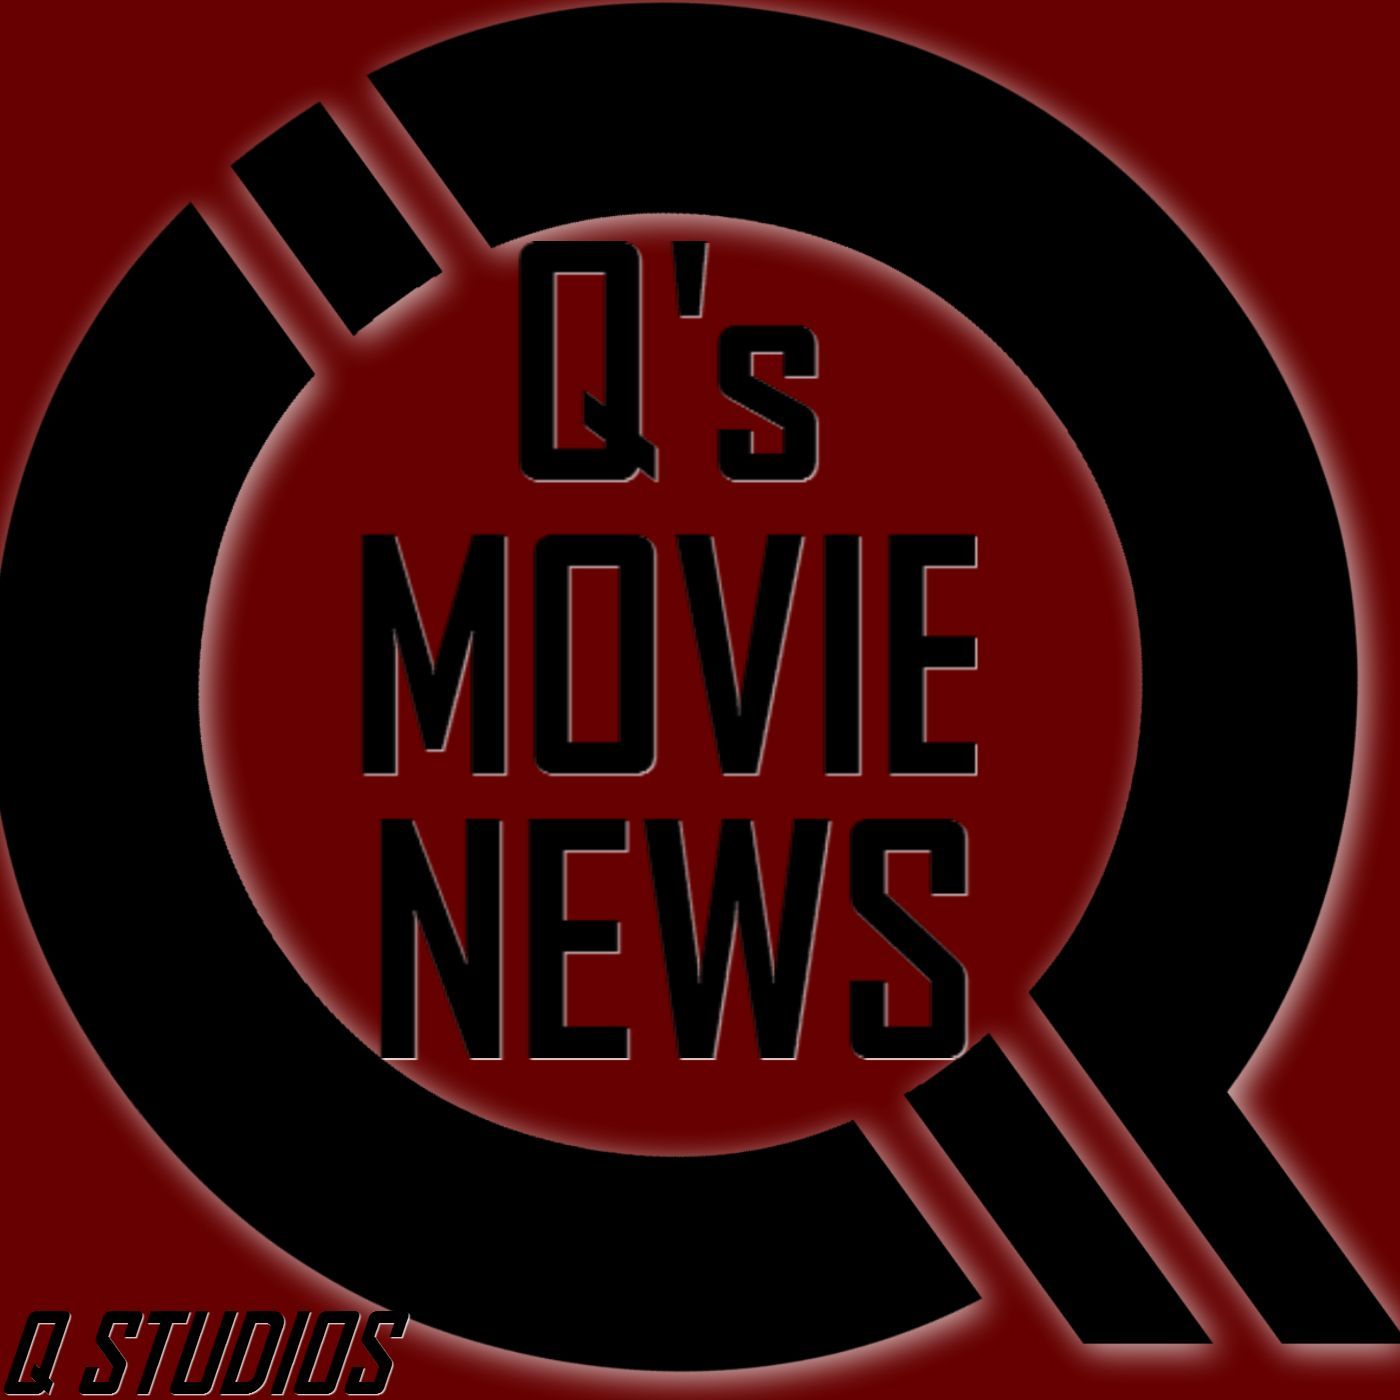 Q,s Movie News